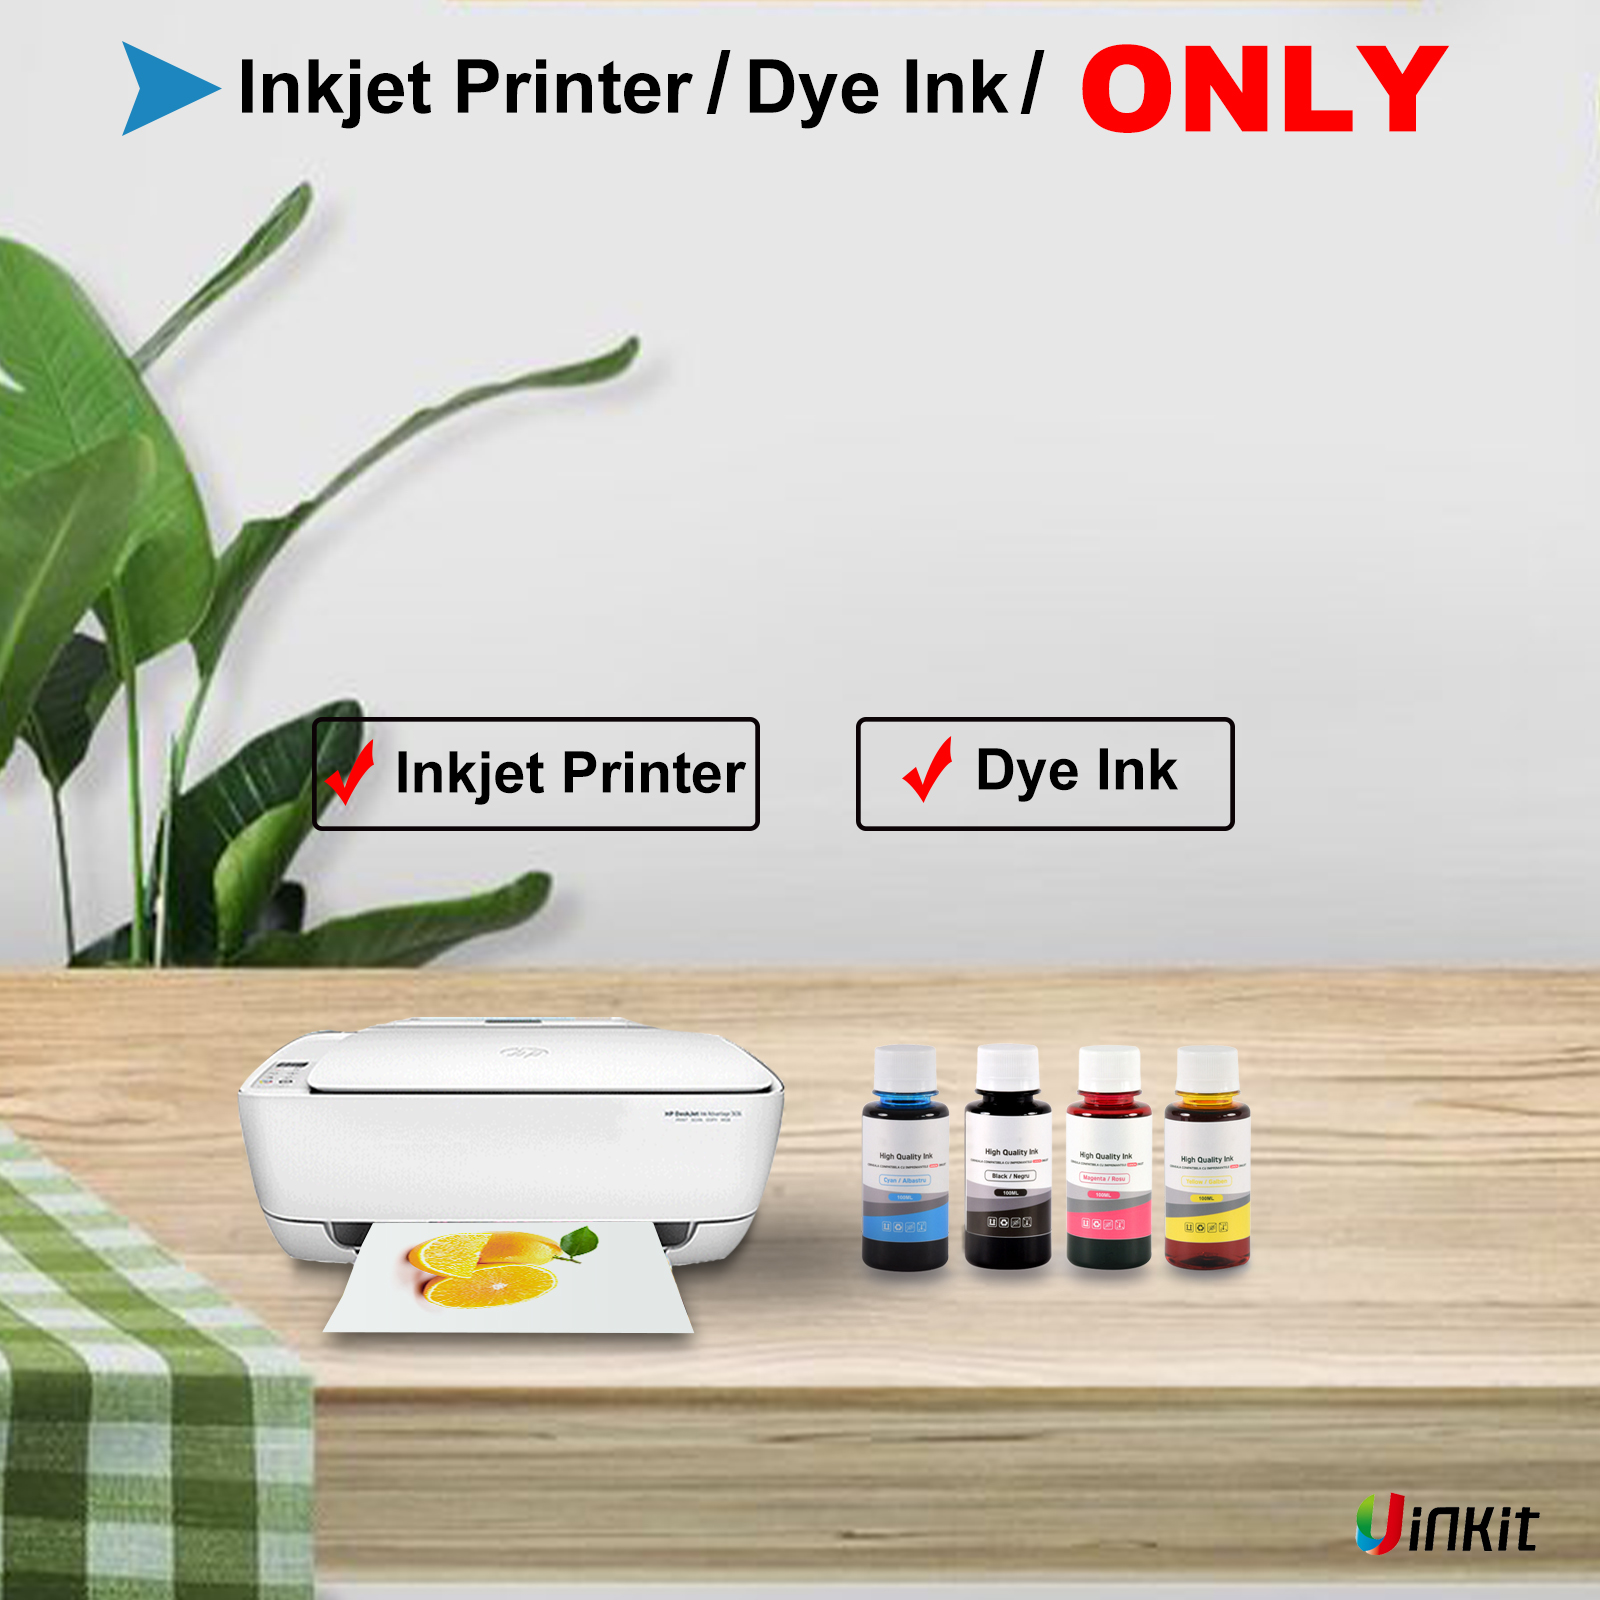 Printable Magnetic Sheets – Uinkit Printing Media On line Shop